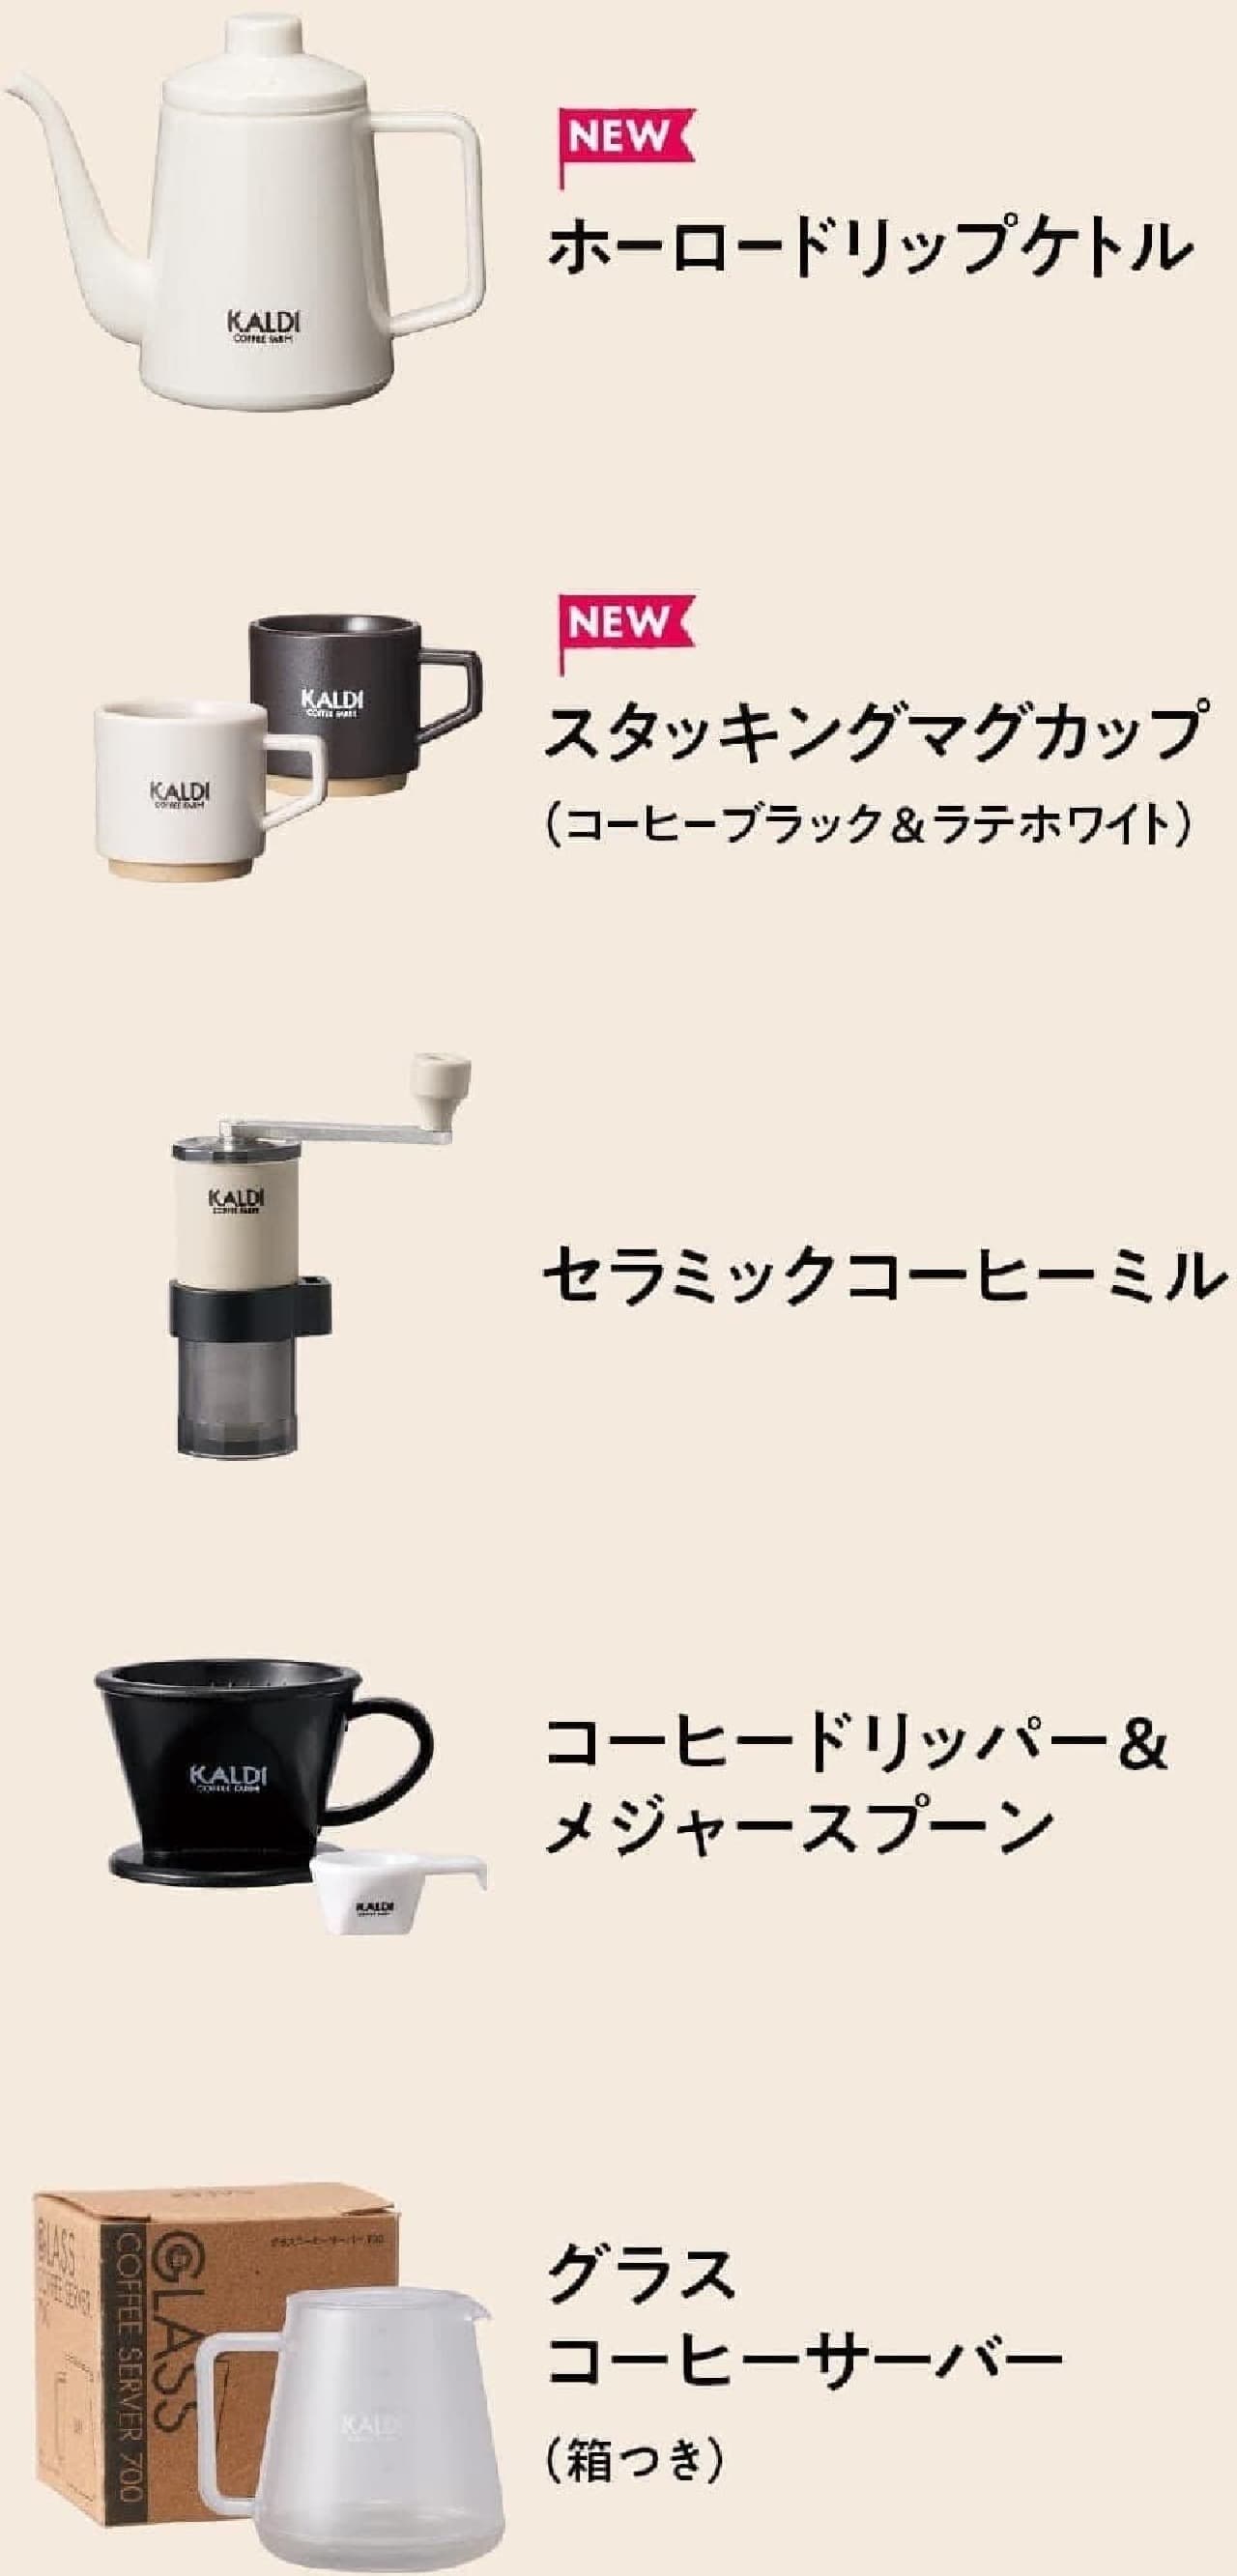 KALDI "Coffee Goods Miniature Figure" Present